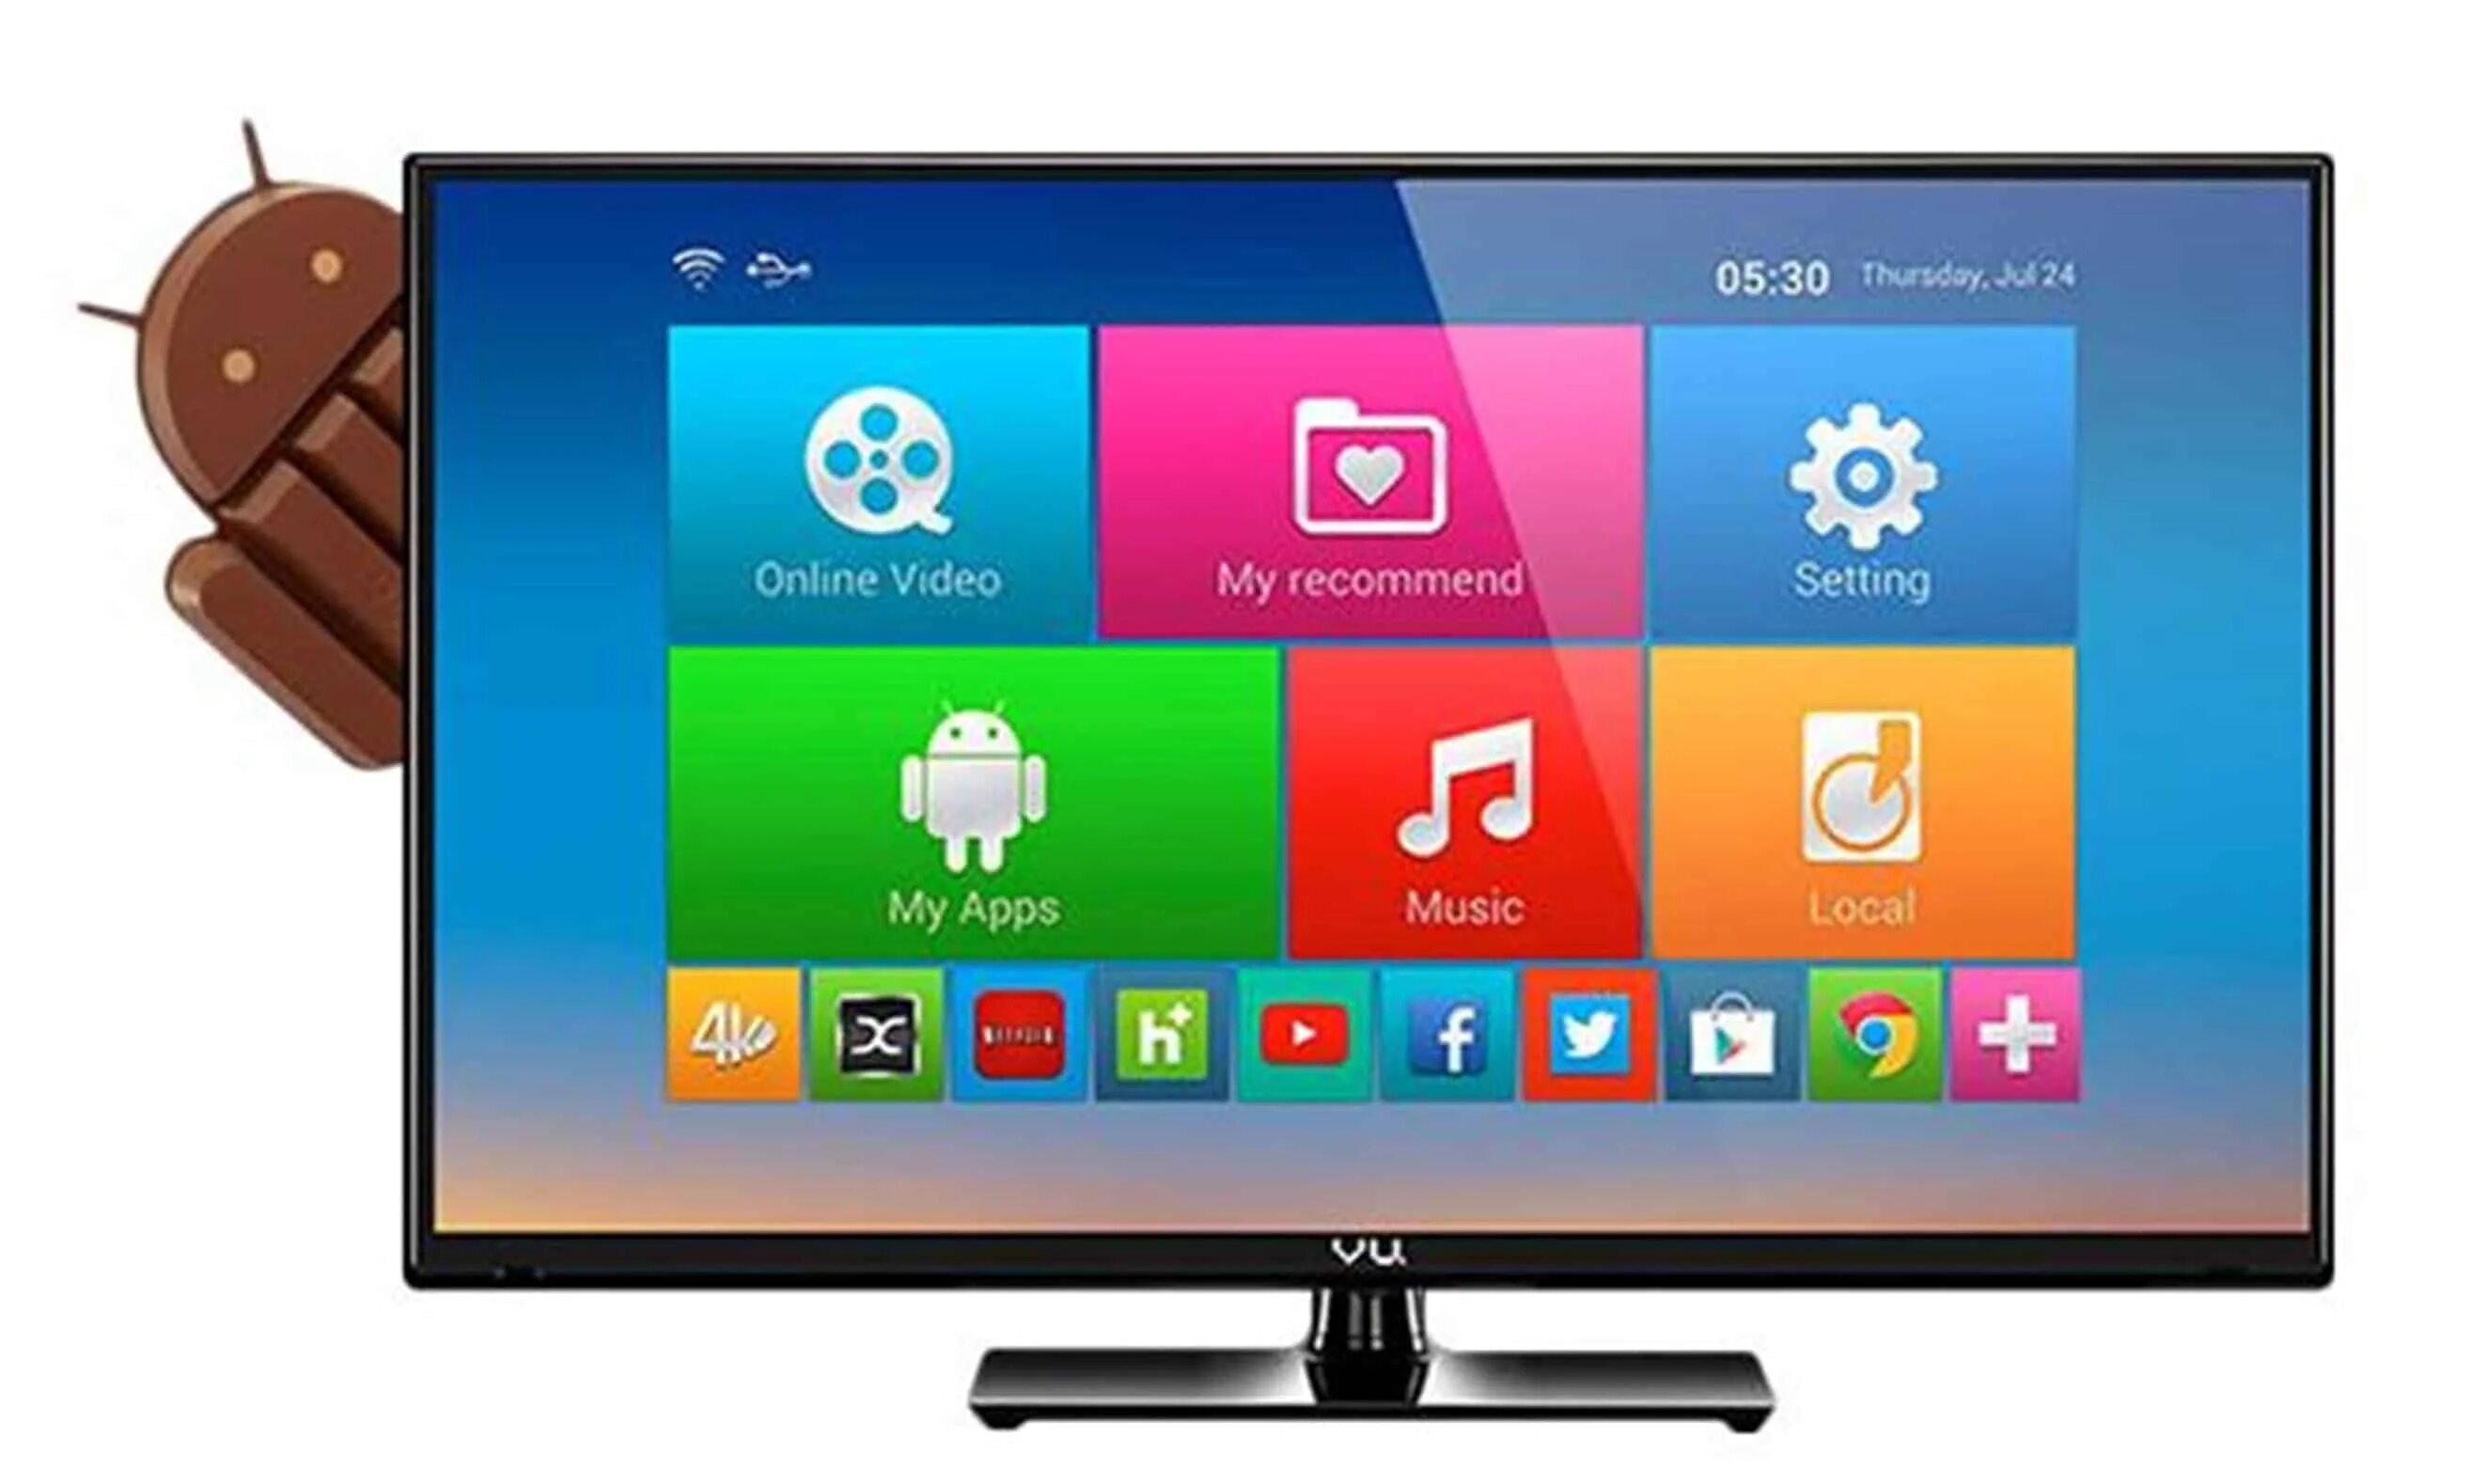 Операционная система ТВ Android TV. Операционная система андроид ТВ на телевизоре. Операционная система андроид ТВ 9.0. Андроид 9 смарт ТВ.